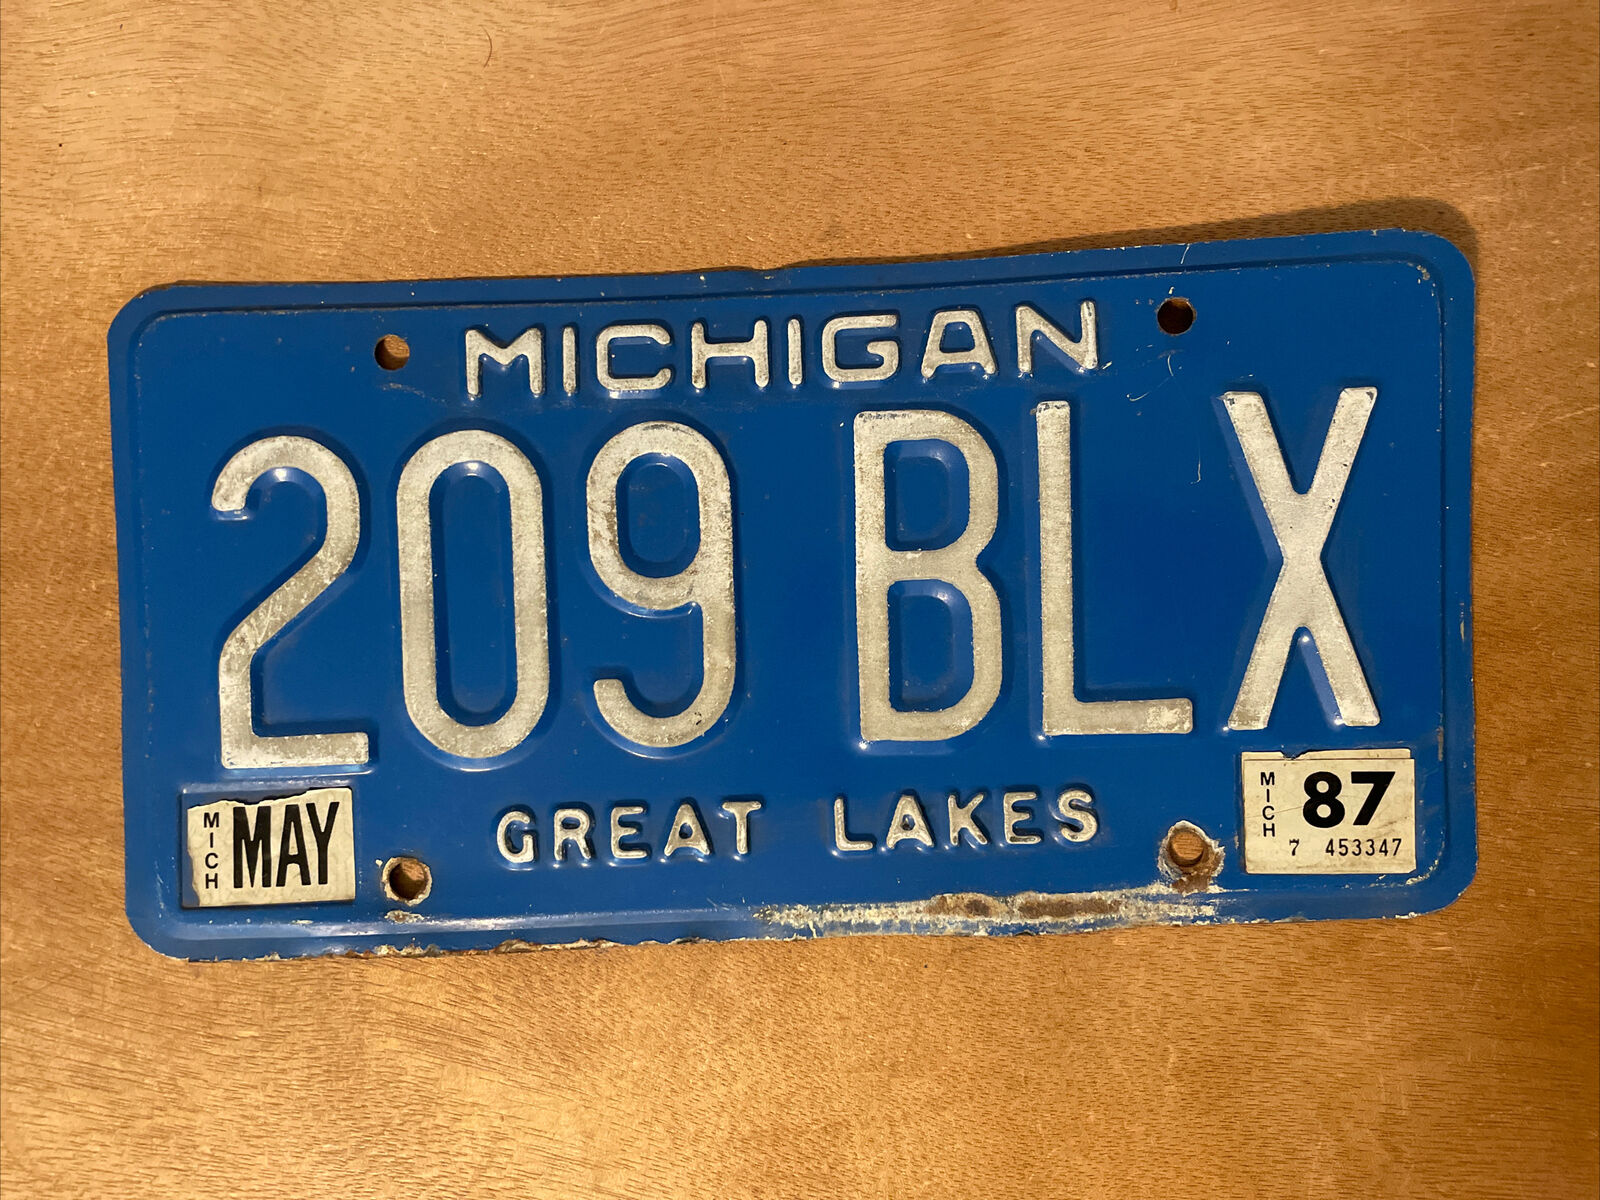 1987 Michigan License Plate Great Lakes Blue # 209 BLX